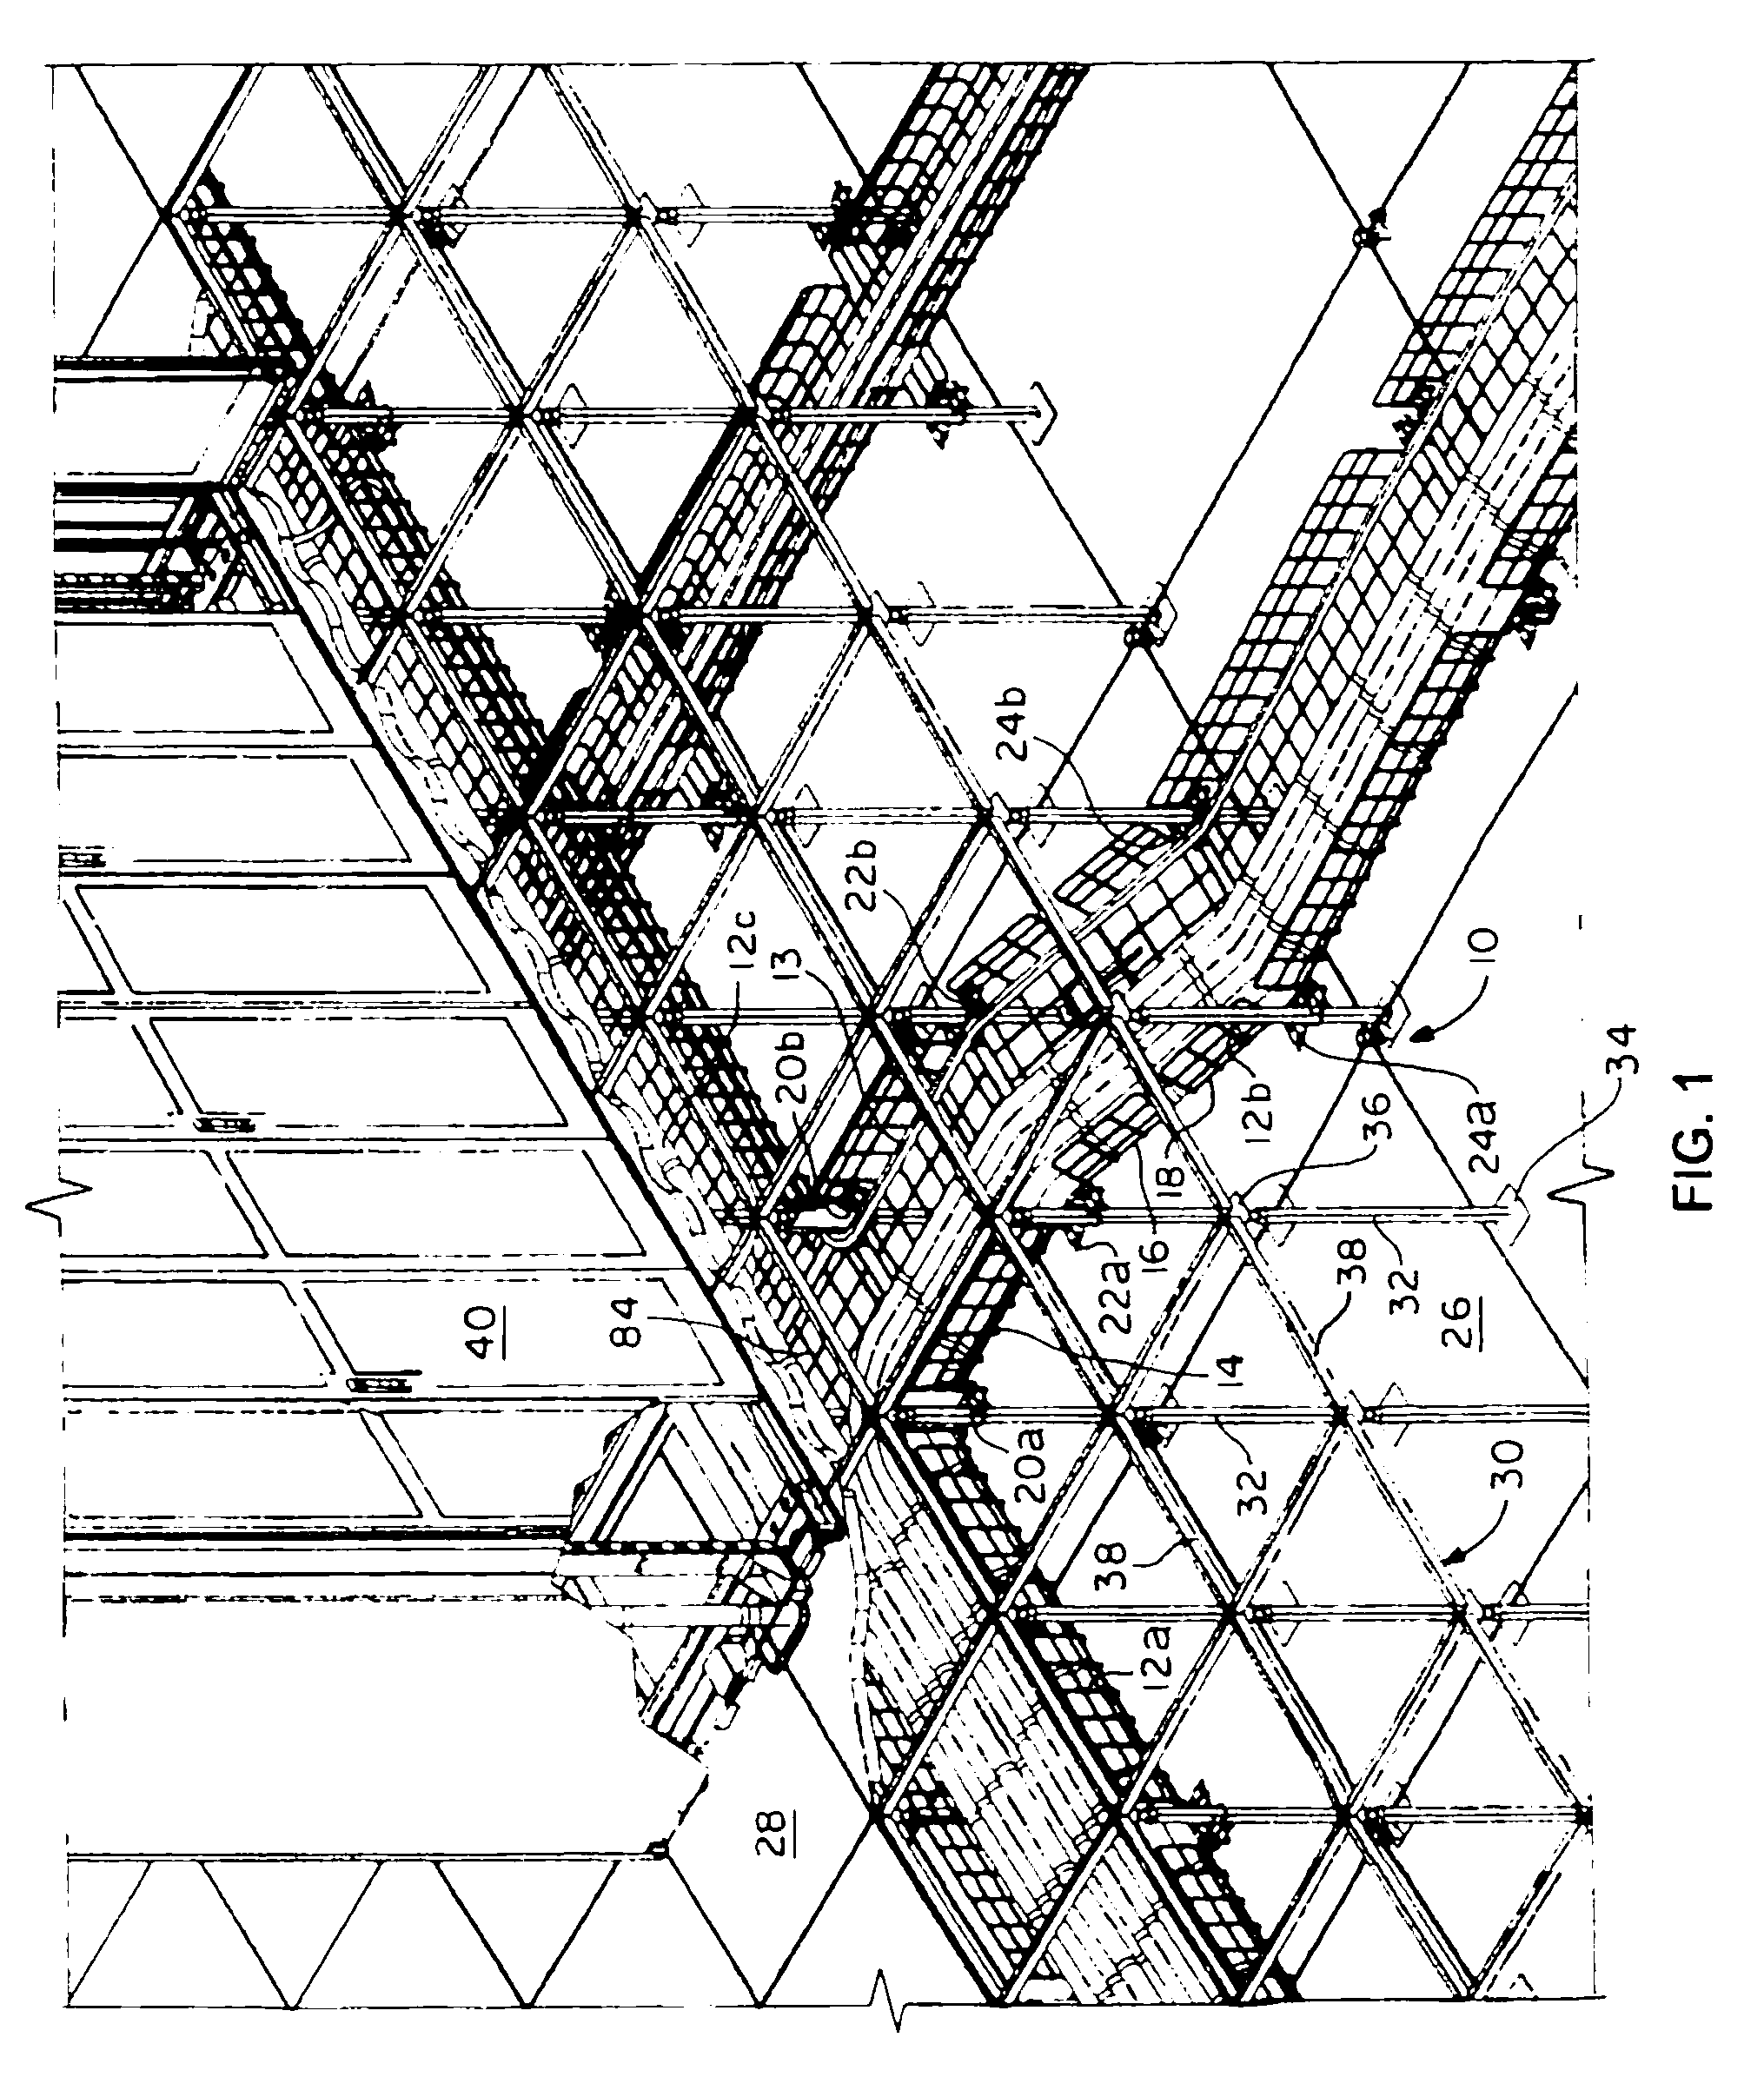 Wire basket pathway system